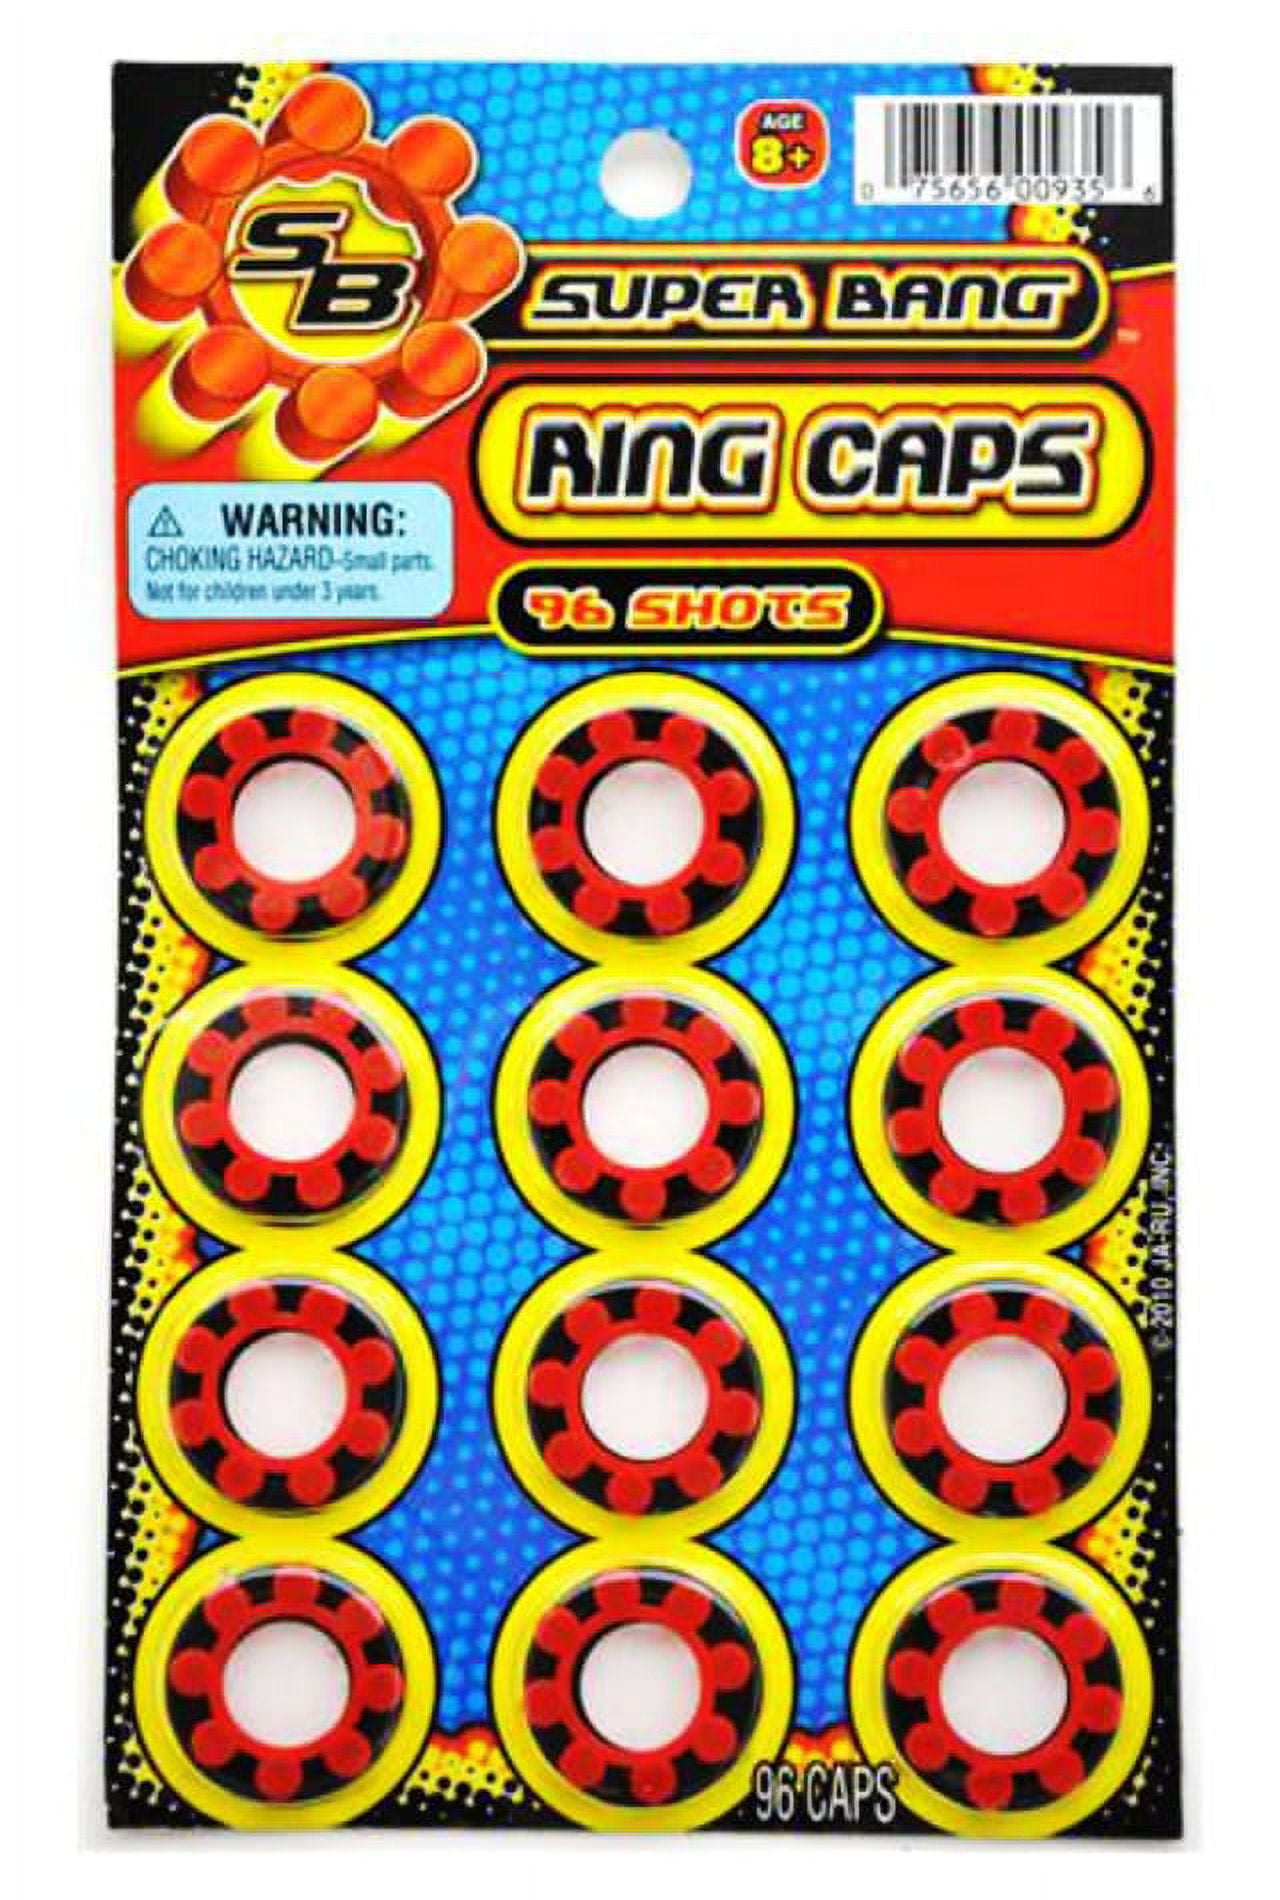 Cap Gun -revolving- 8 shot ring caps - YouTube